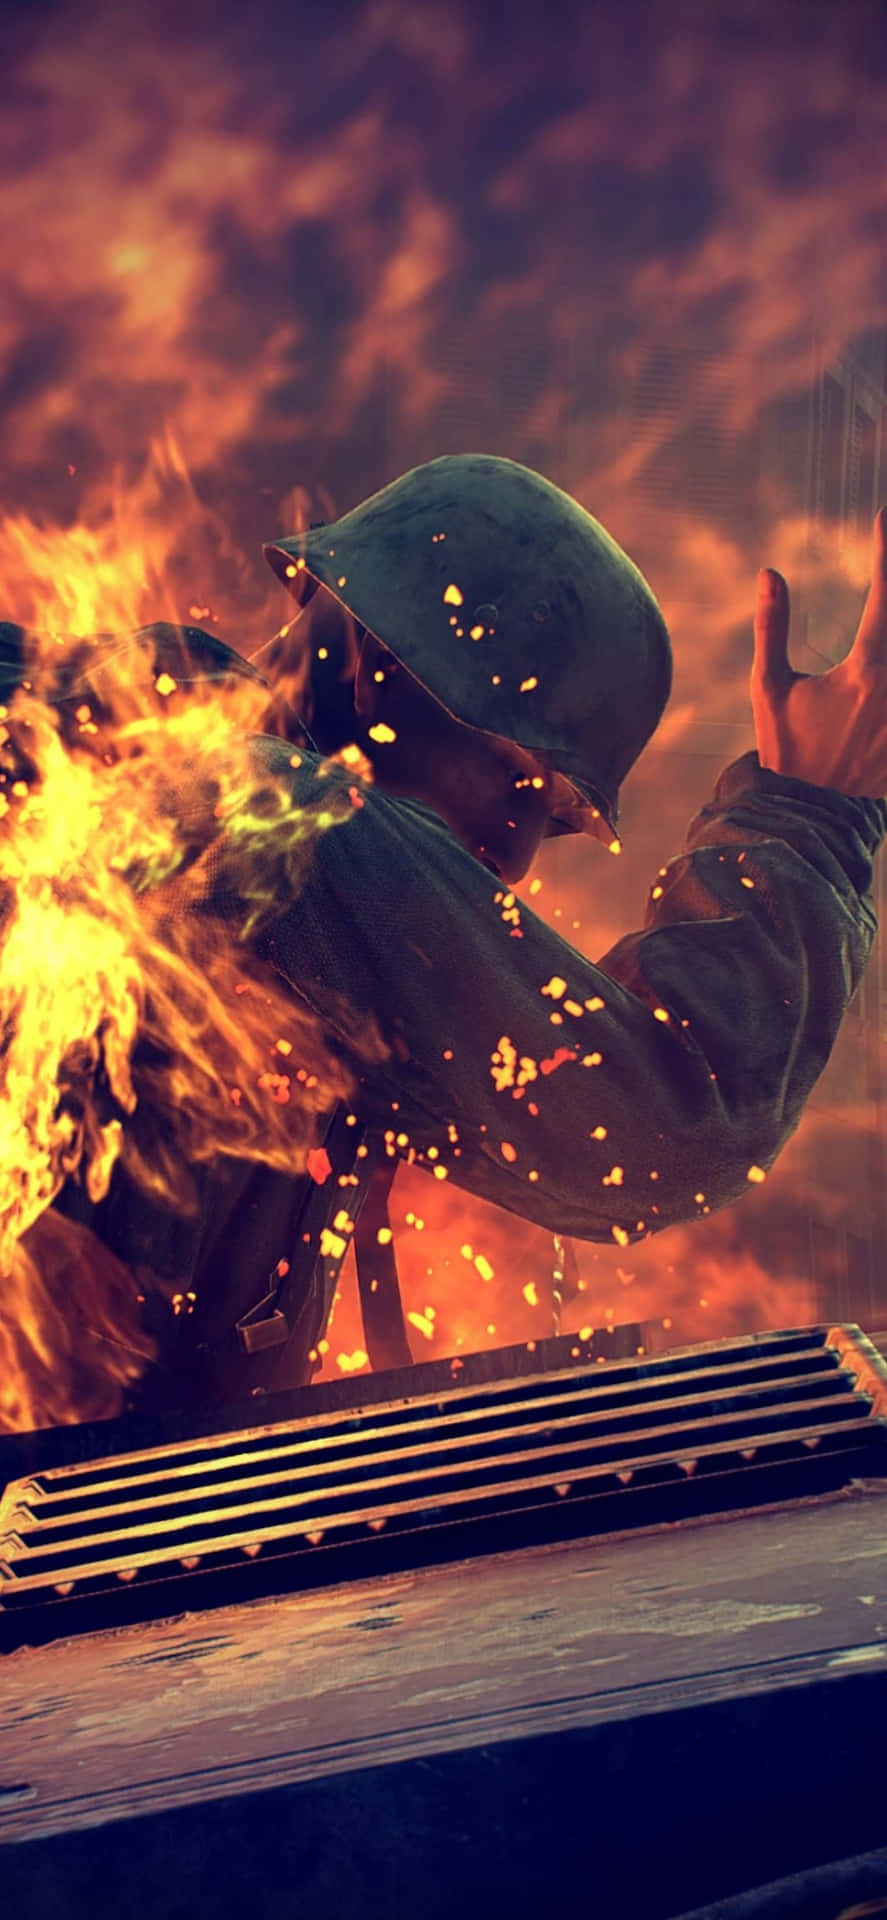 Iphonexs Max Battlefield V Brinnande Soldat Bakgrundsbild.